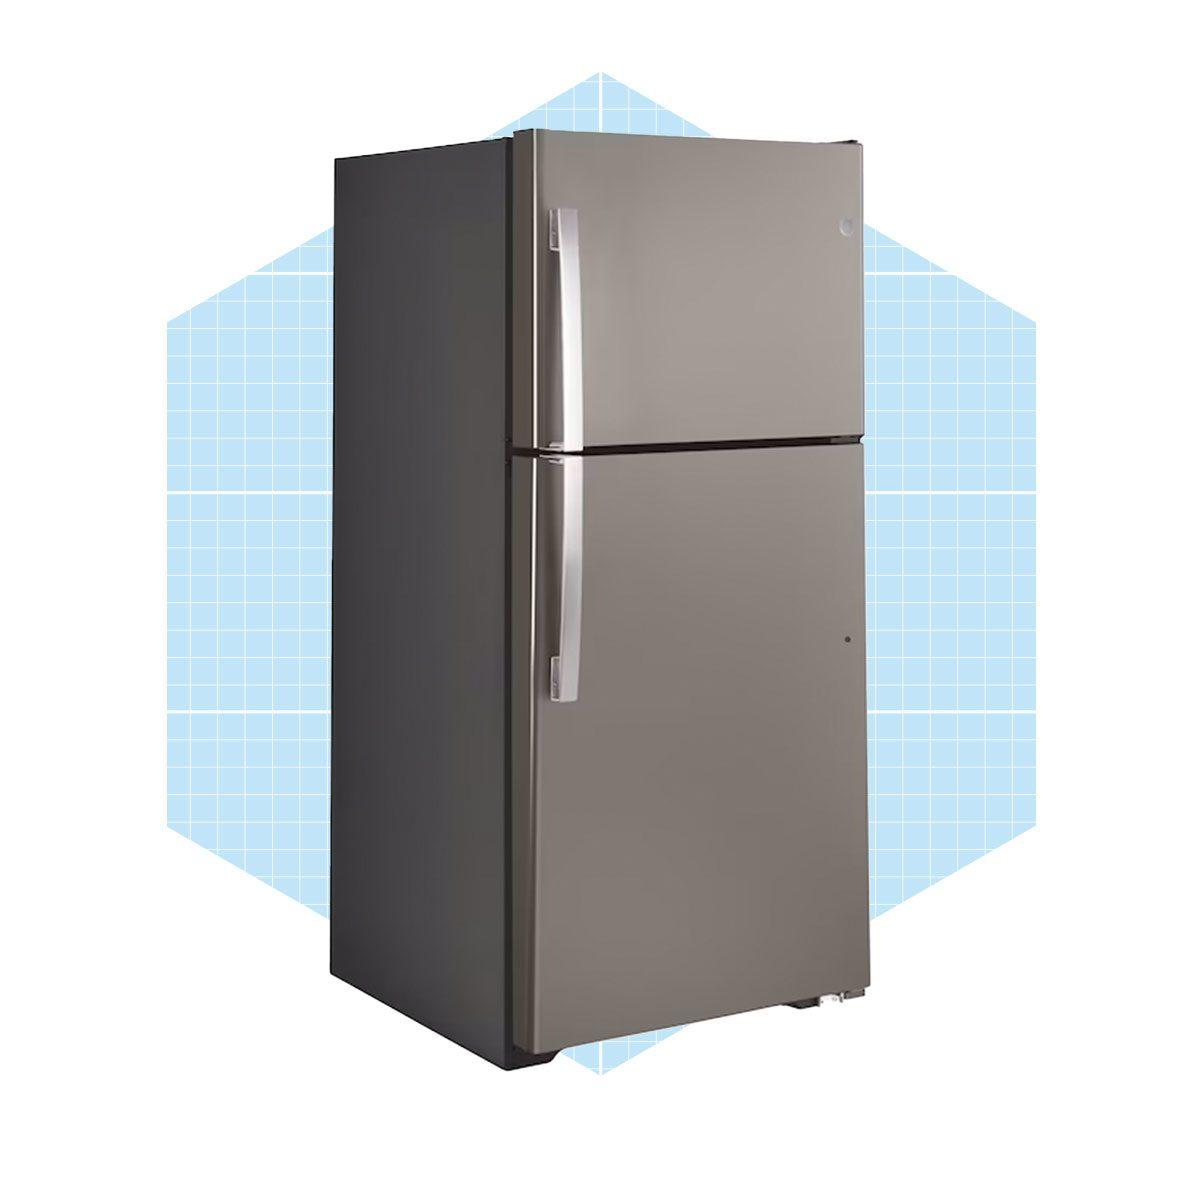 The 6 Best Energy-Efficient Refrigerators